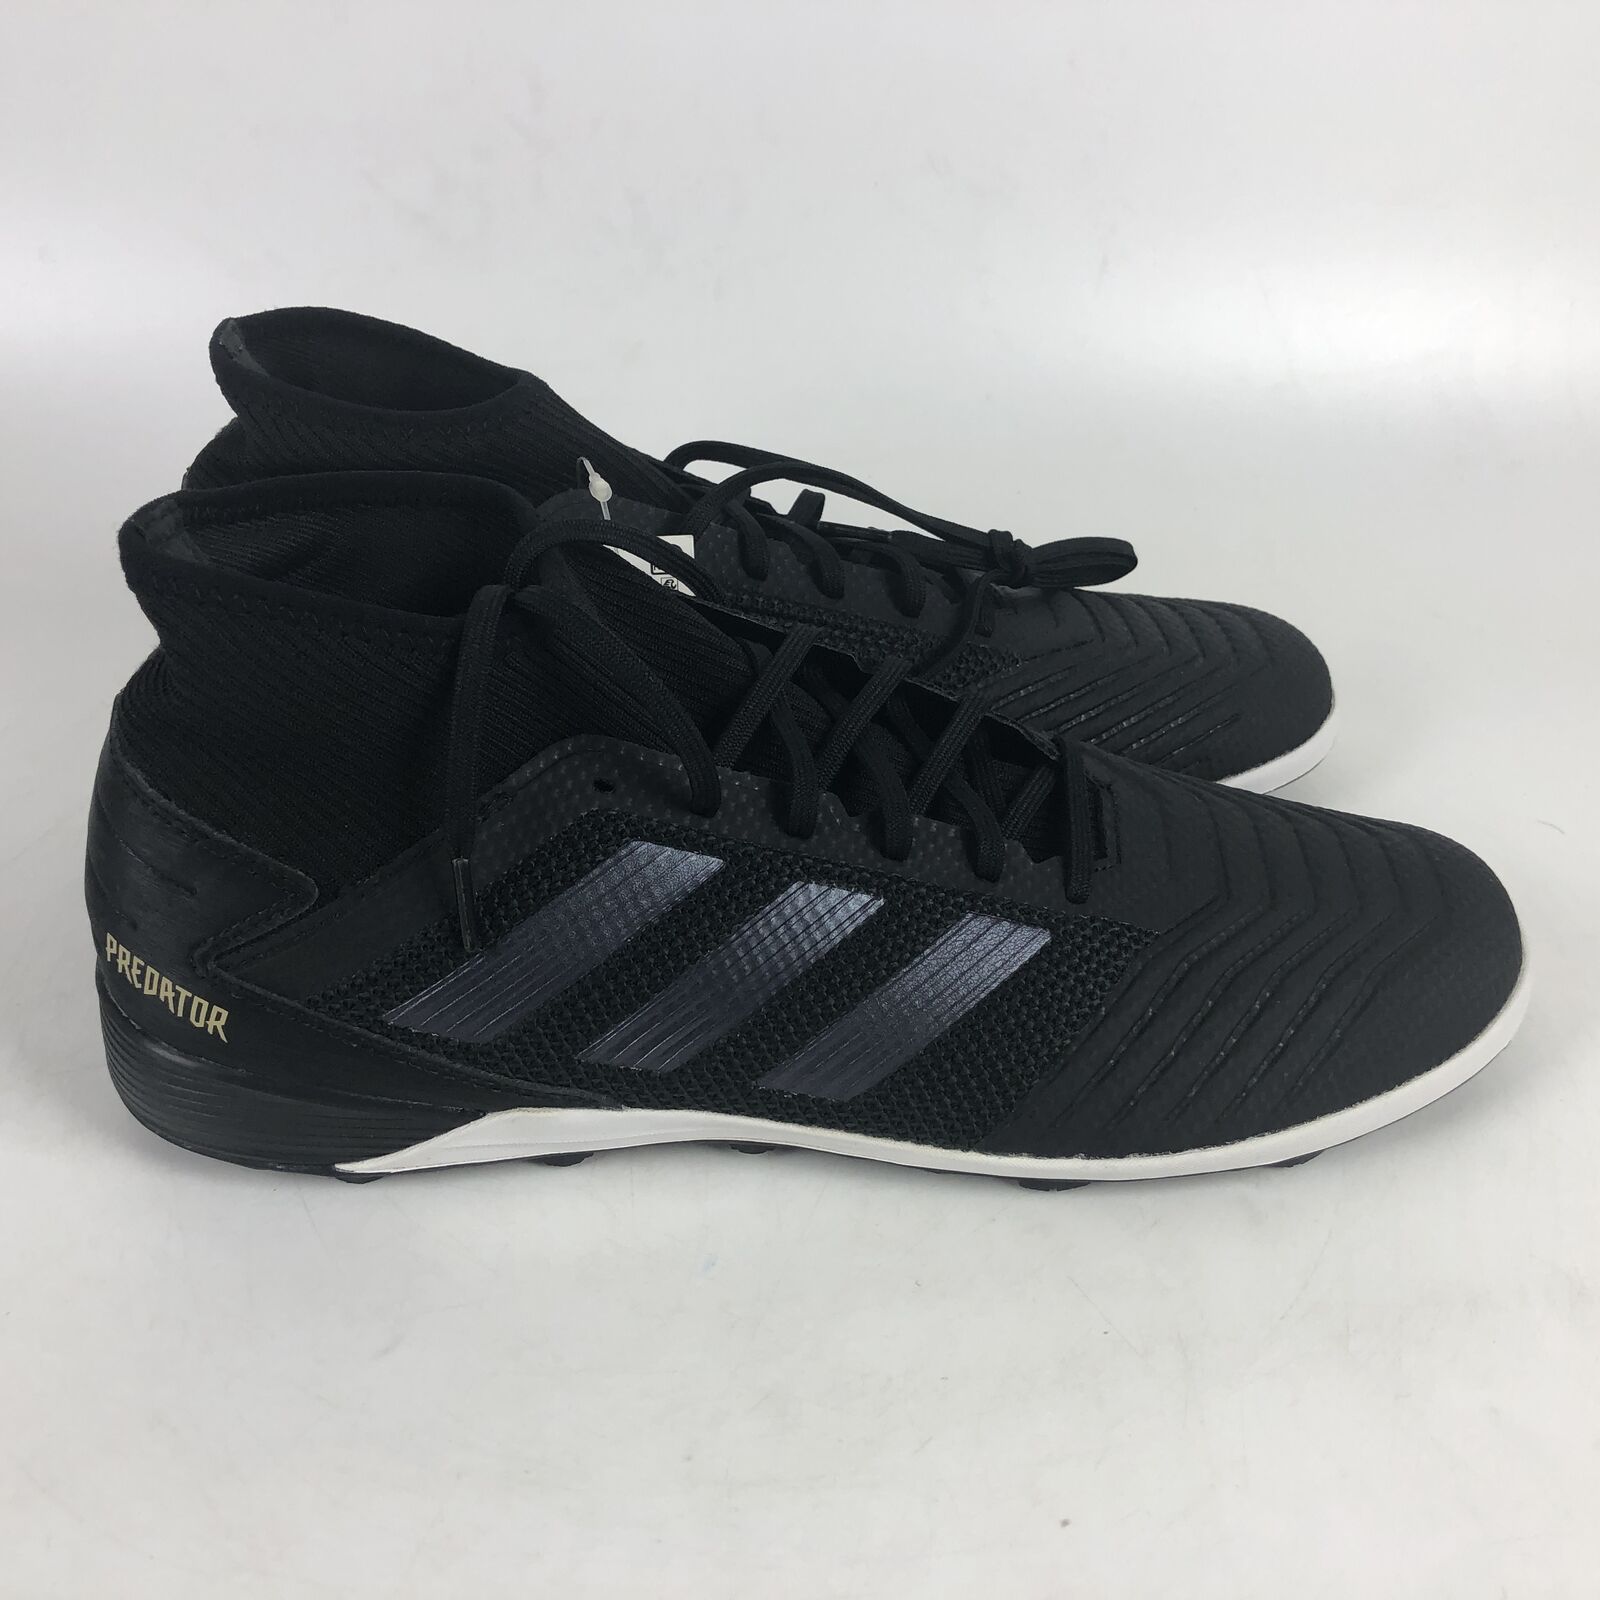 Adidas Predator 19.3 Tf Indoor Soccer Shoes Mens Size 13.5 Black F35627 ...